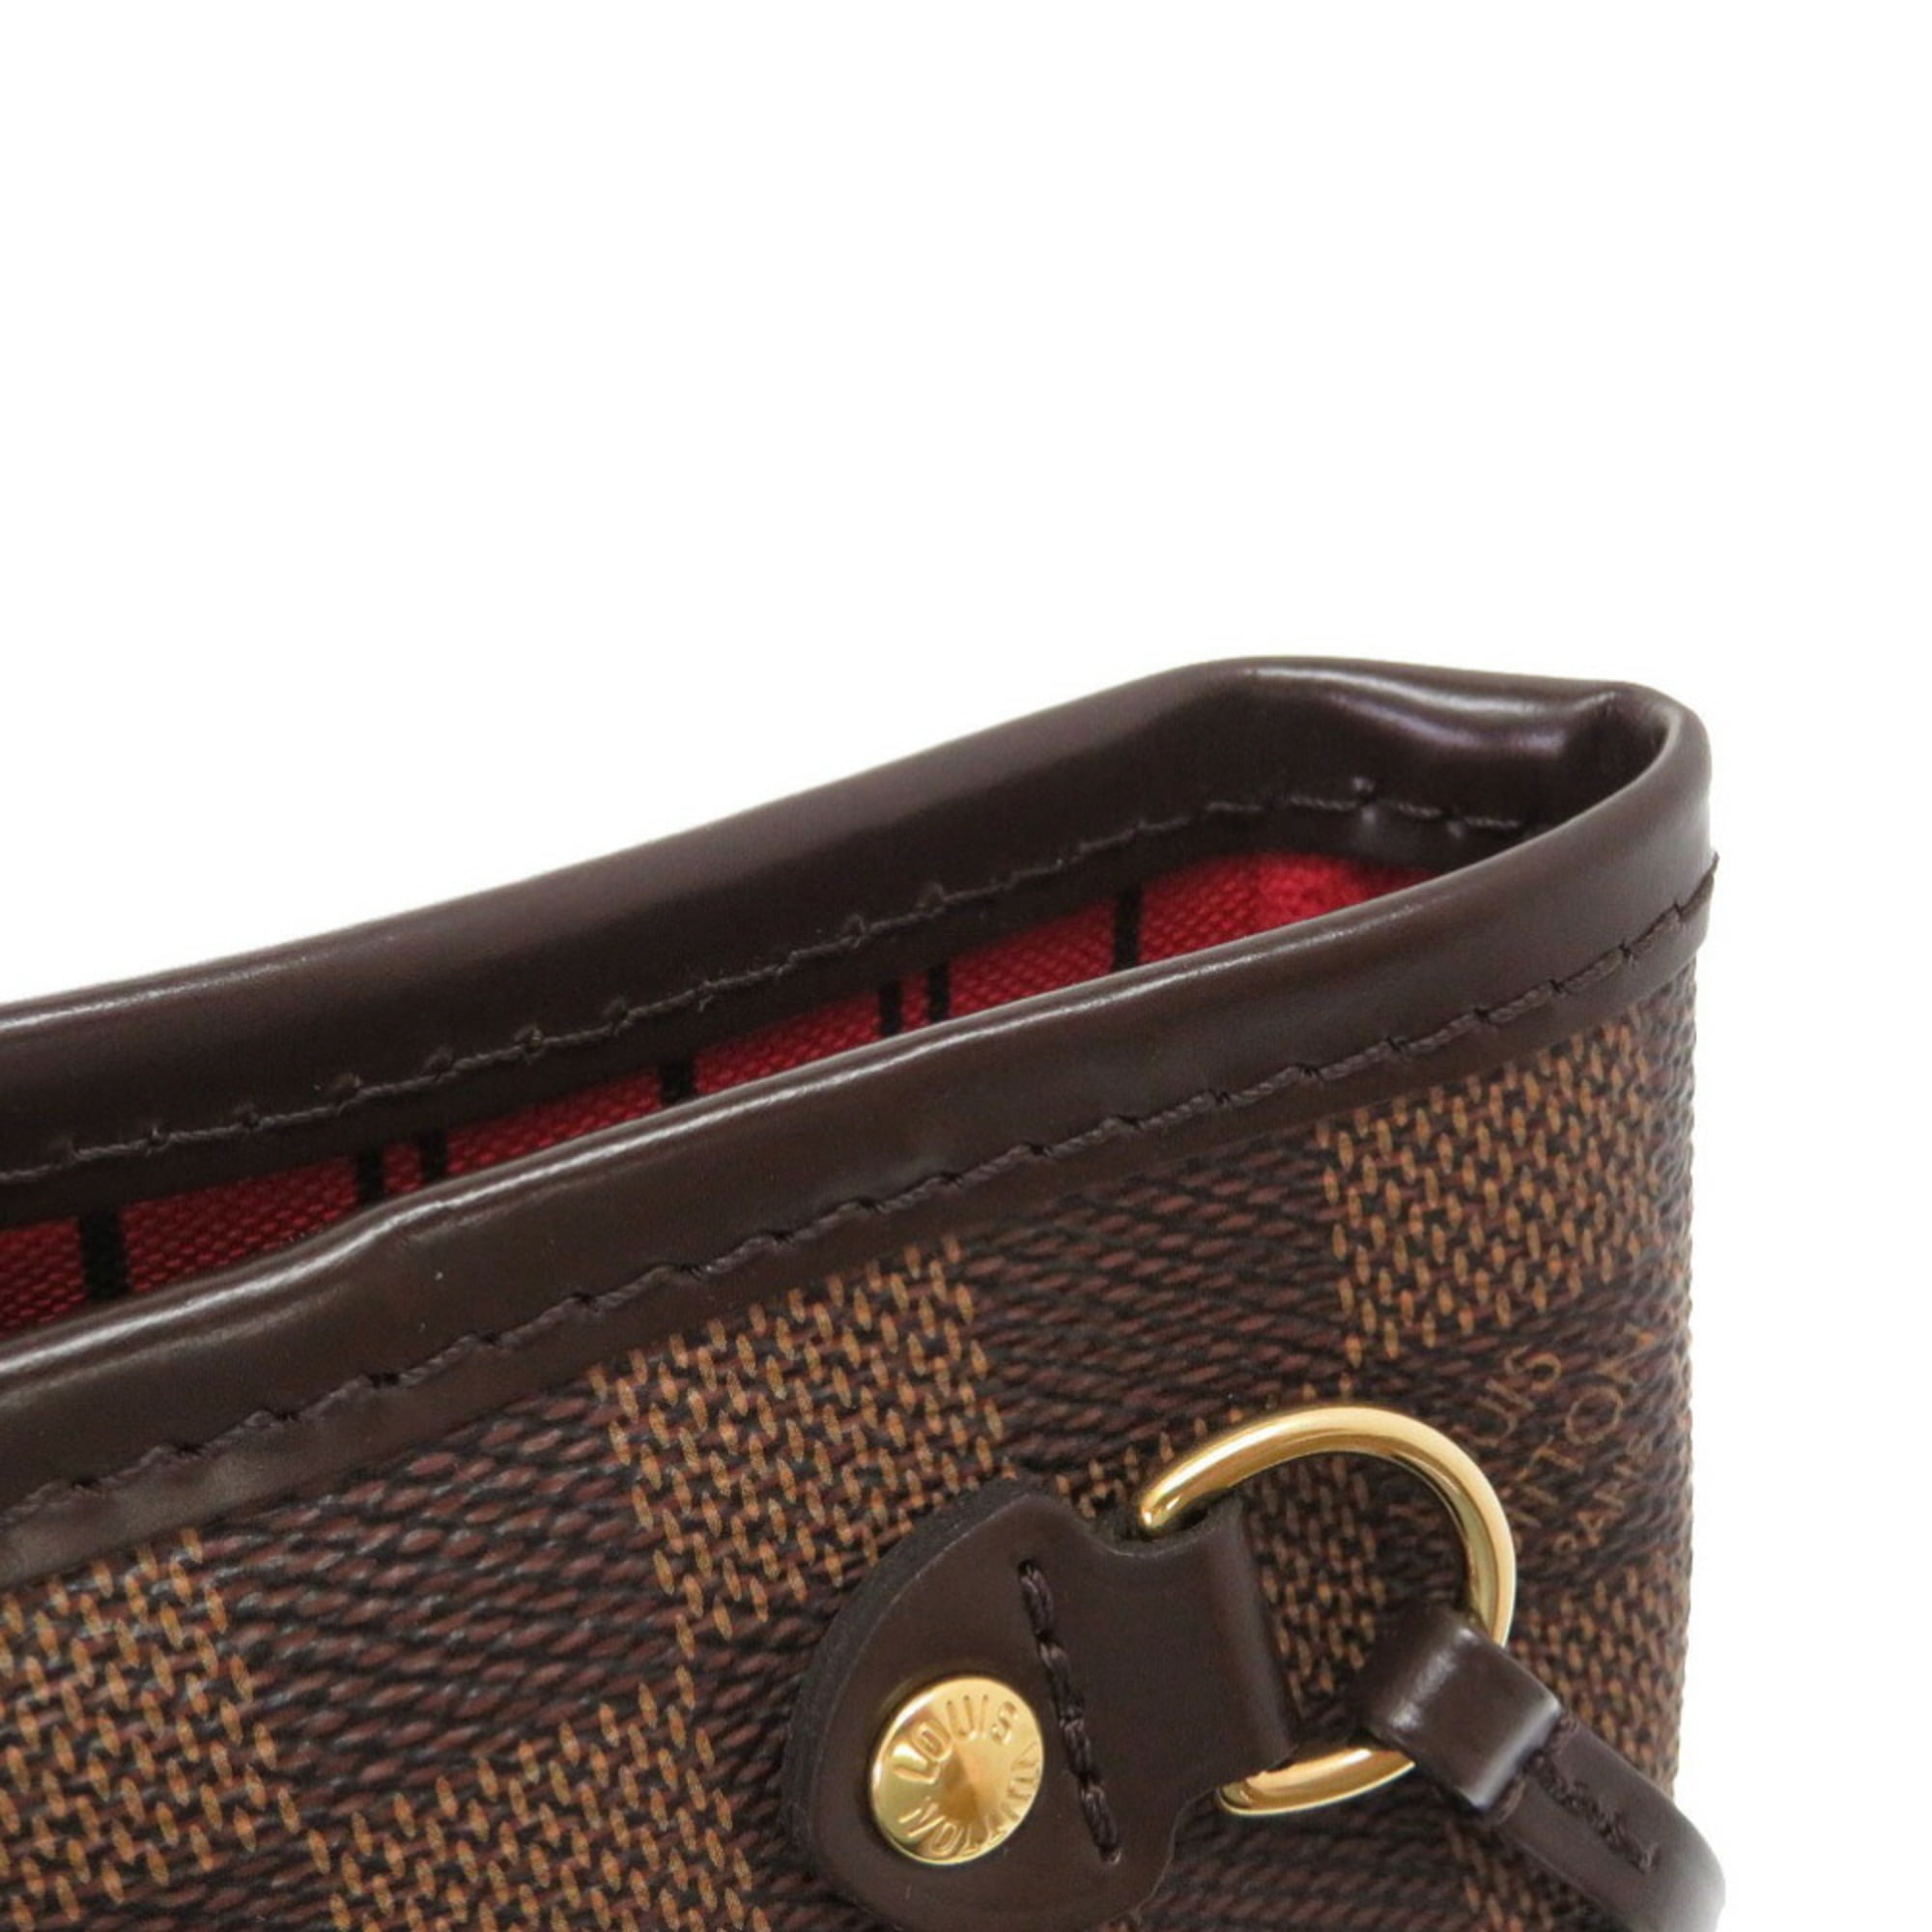 Neverfull PM Damier Ebene in Brown - Handbags N41359, LOUIS VUITTON ®